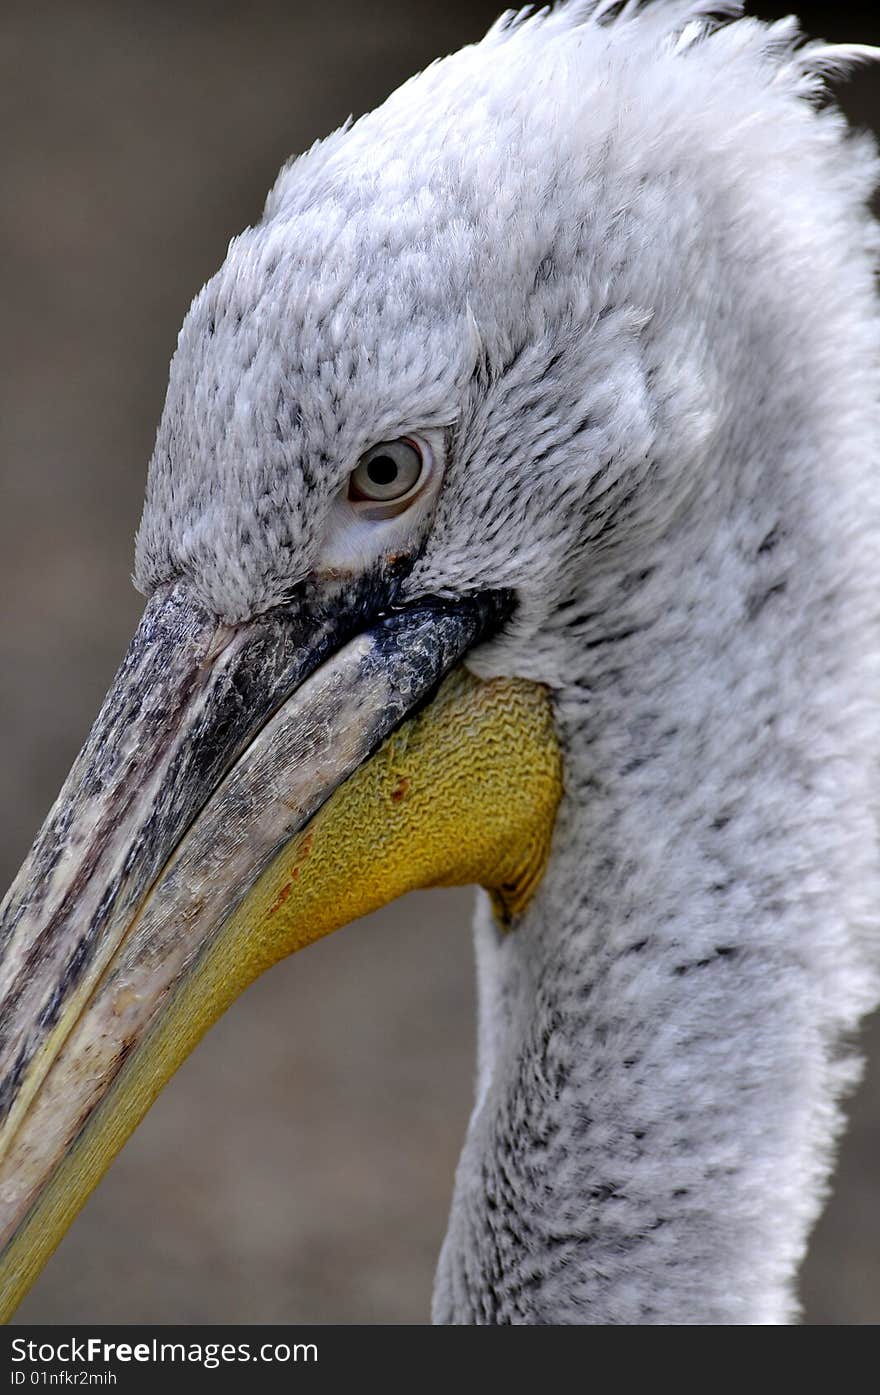 Great white pelican detail portrait. Great white pelican detail portrait